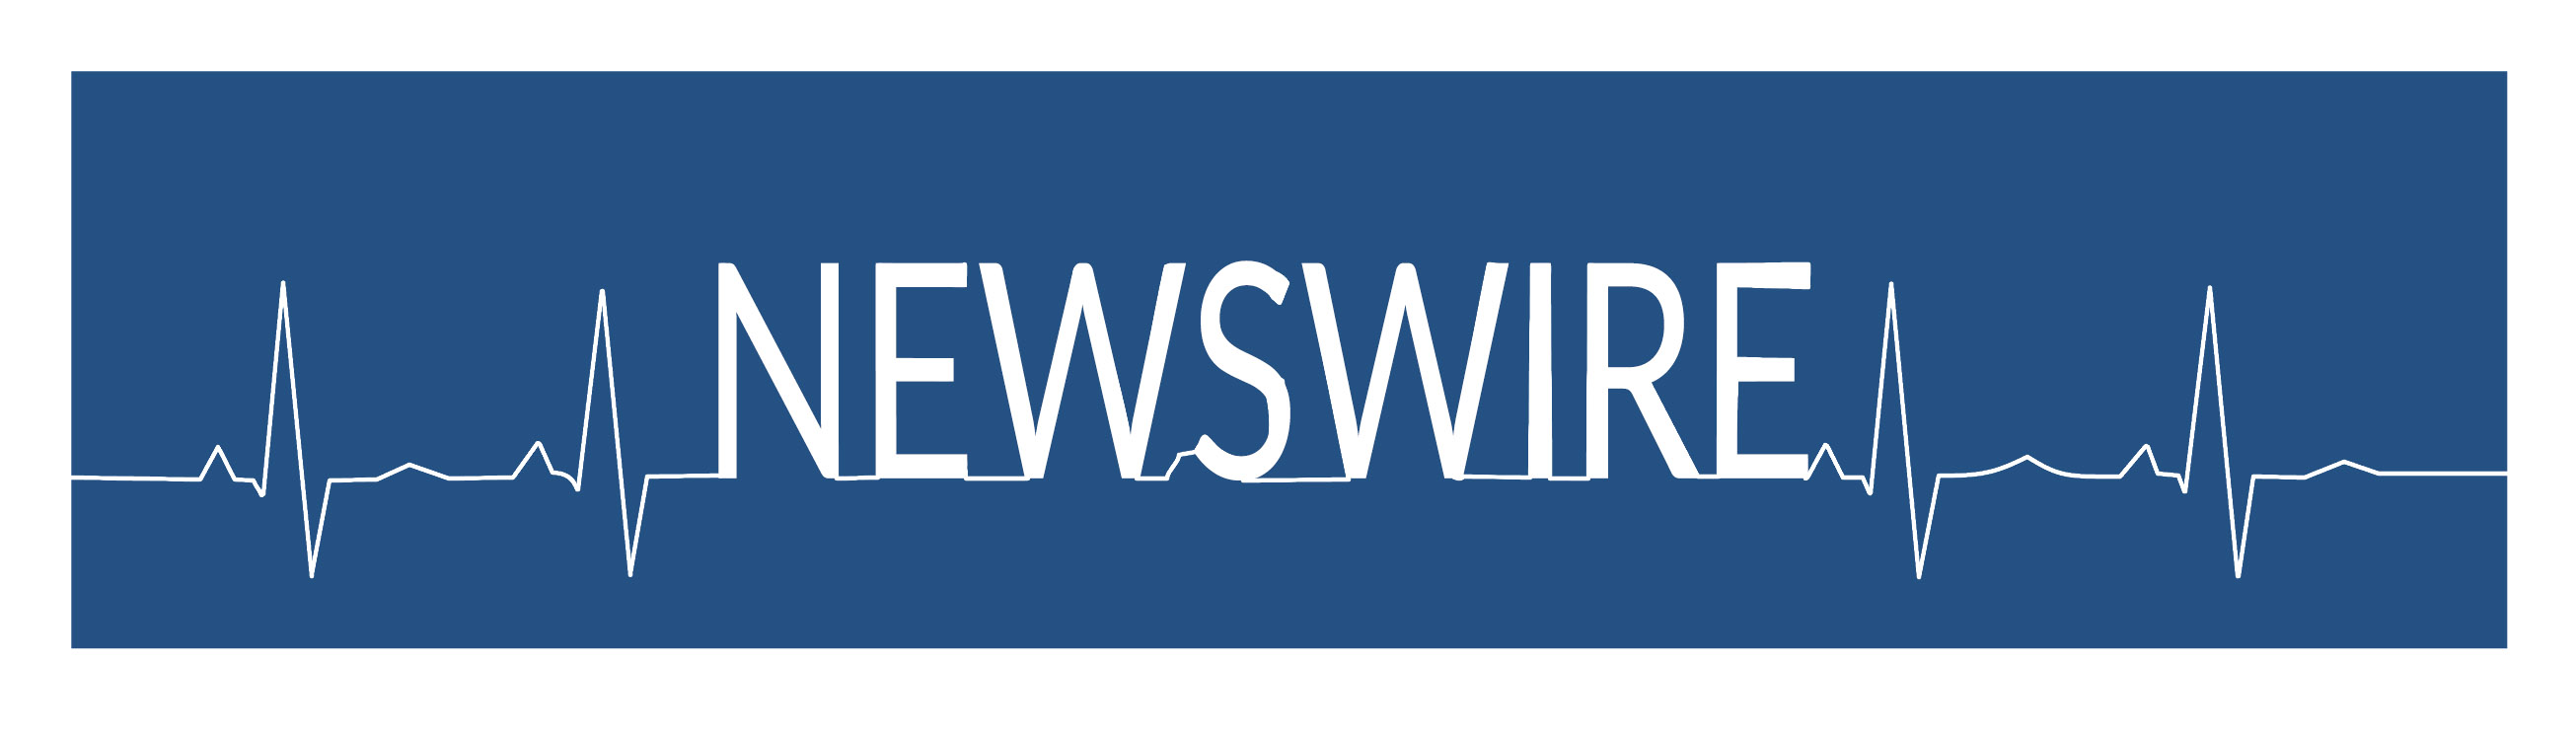 Newswire pulse banner